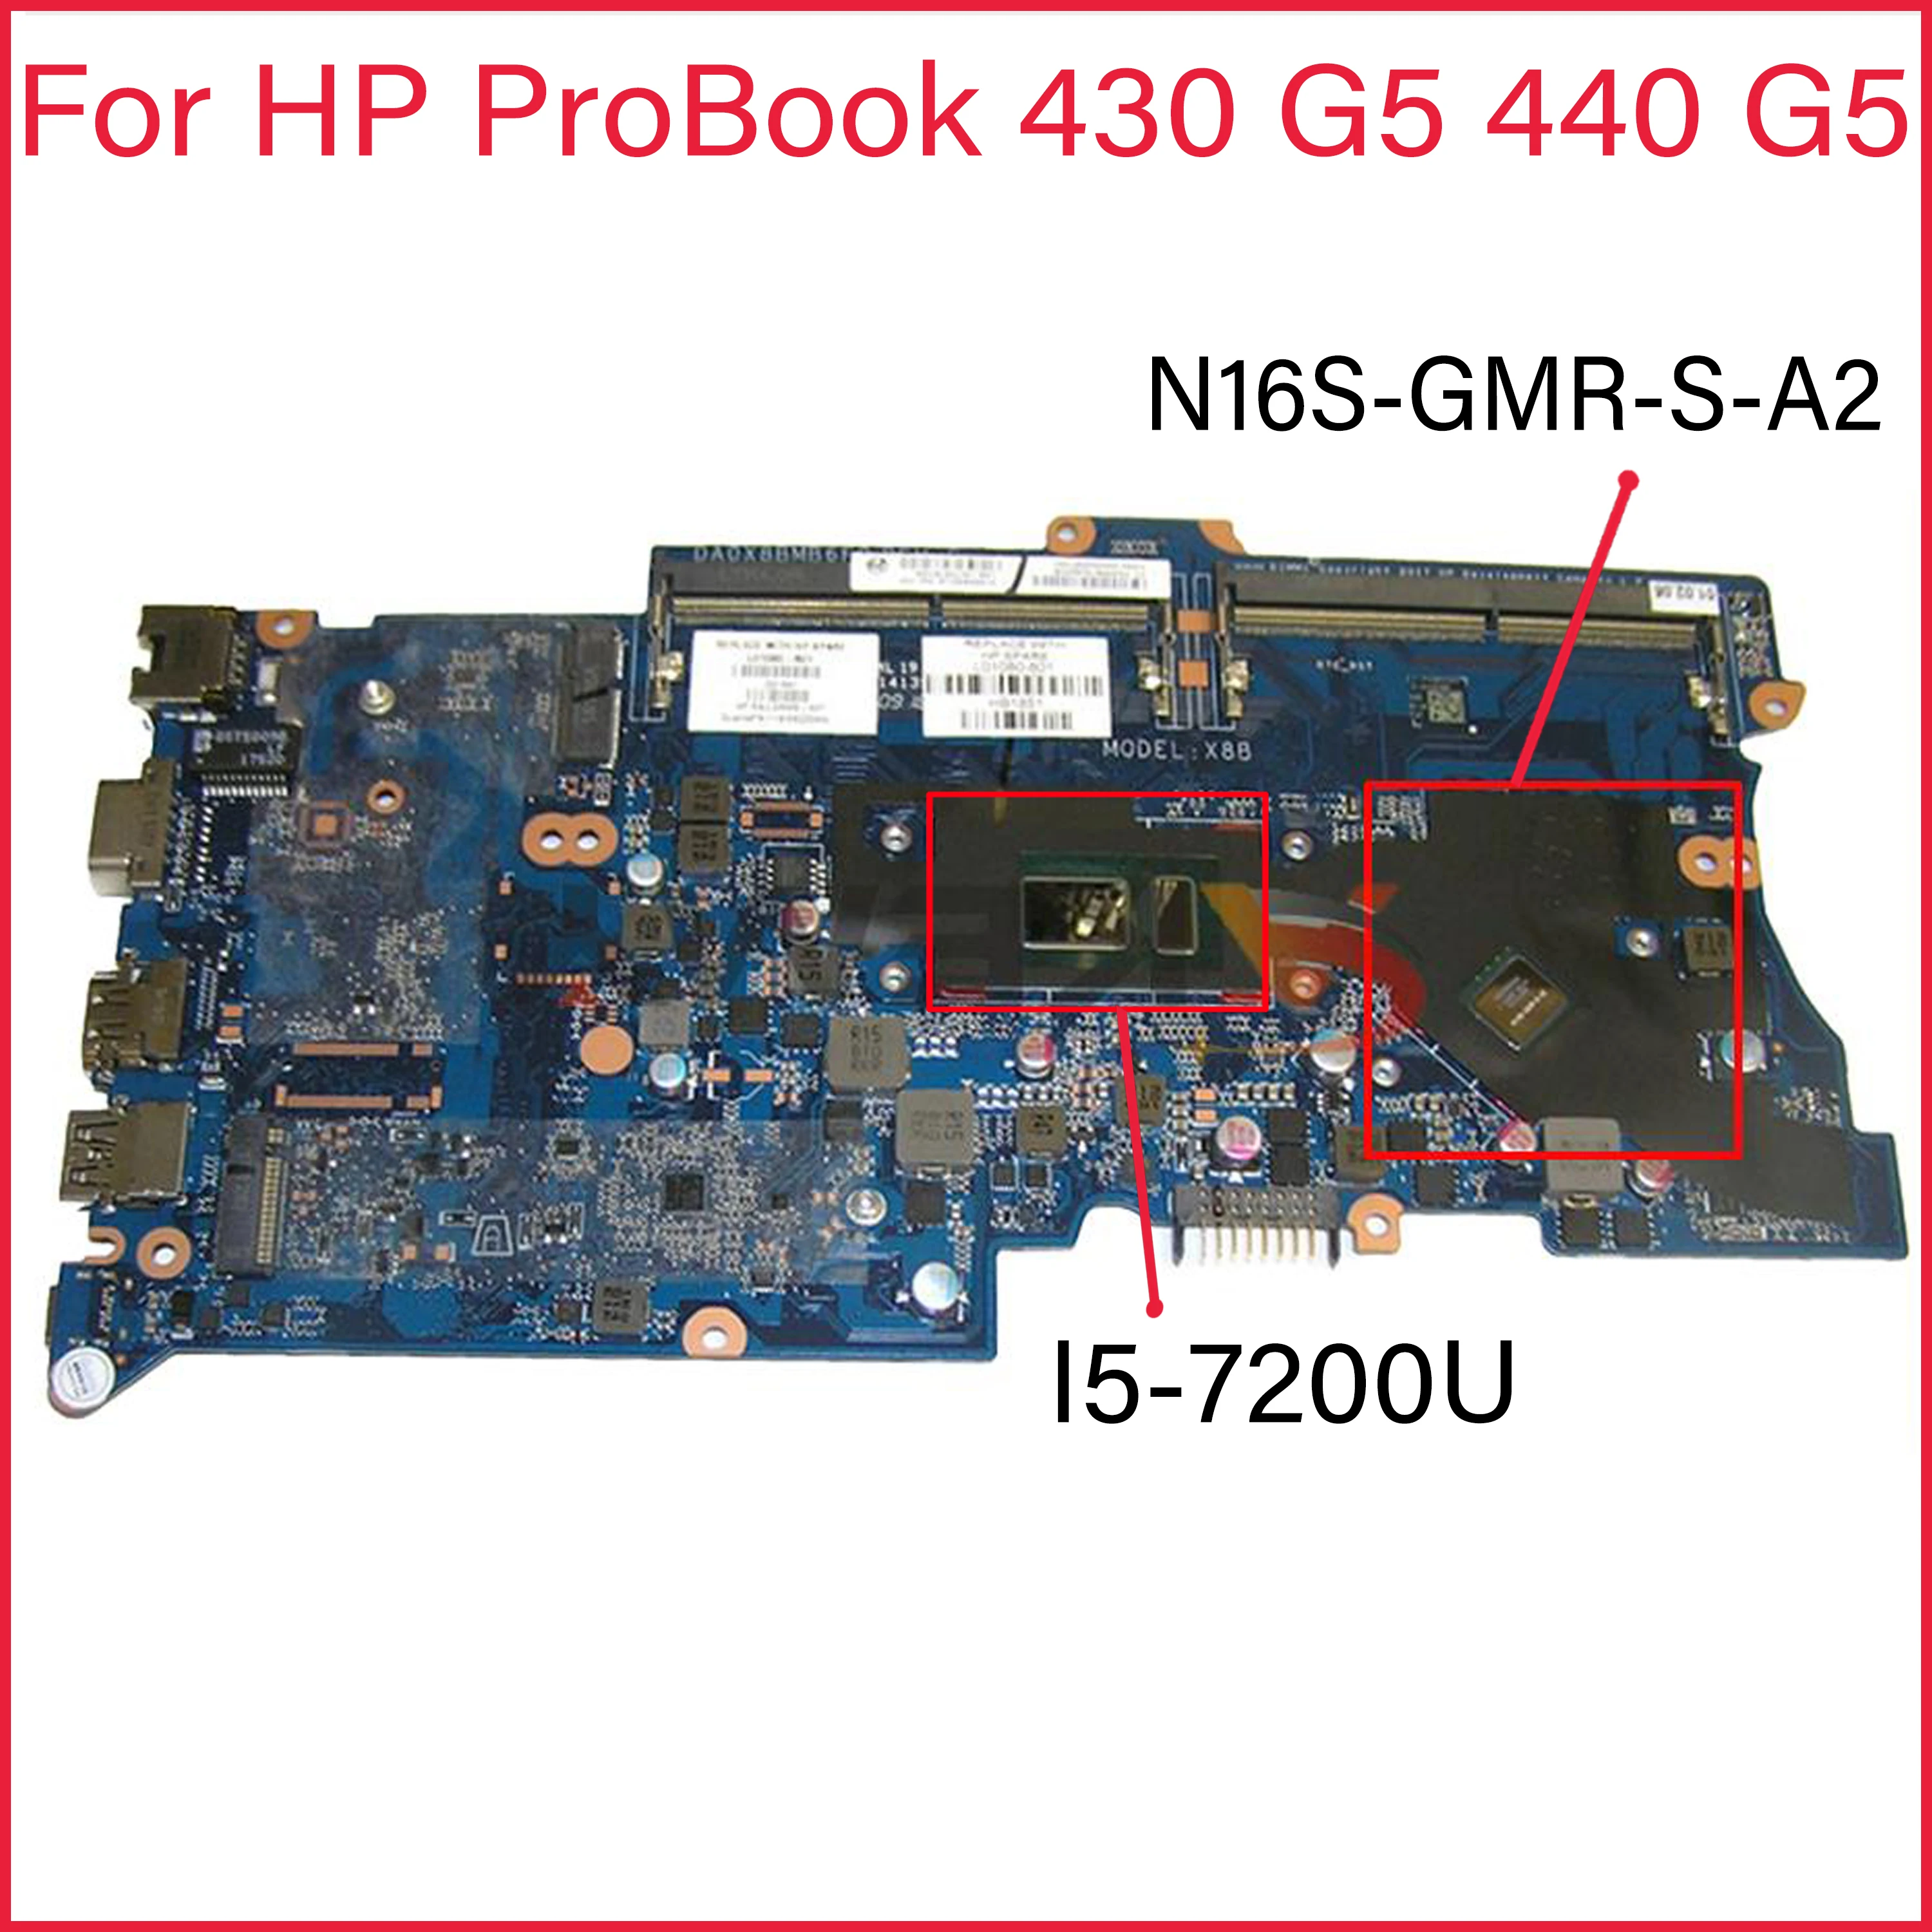 

For HP Probook 430/440 G5 Laptop Motherboard L06798-601 DA0X8BMB6G0 L06798-001 With SR342 I5-7200U CPU N16S-GMR-S-A2 2GB DDR4